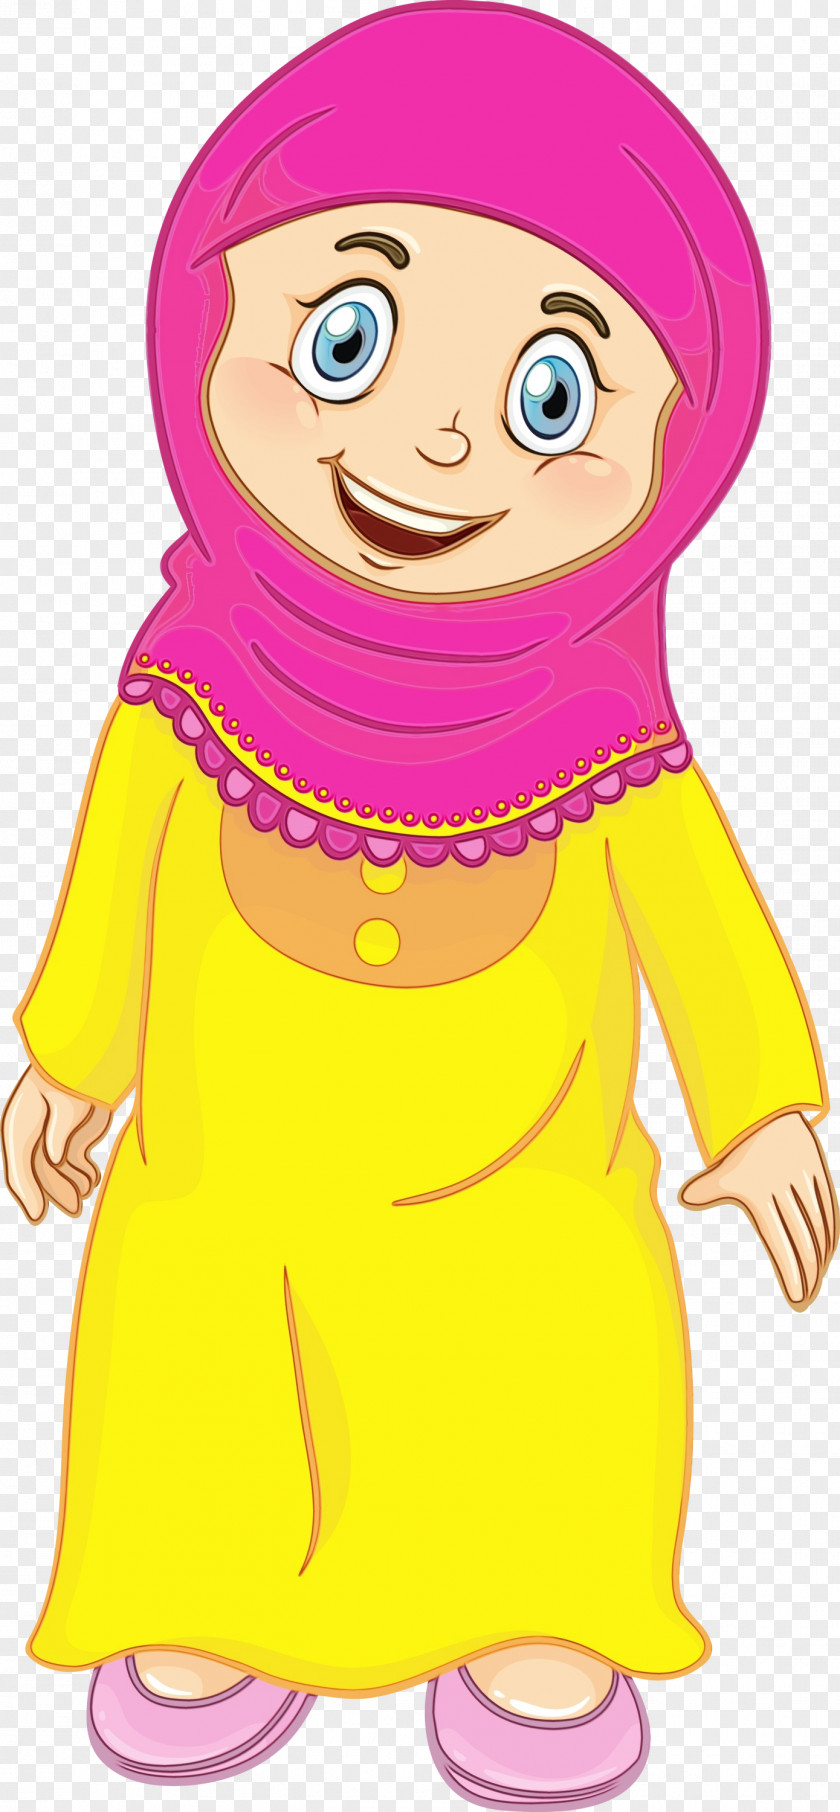 Cartoon Yellow Pink Smile Child PNG